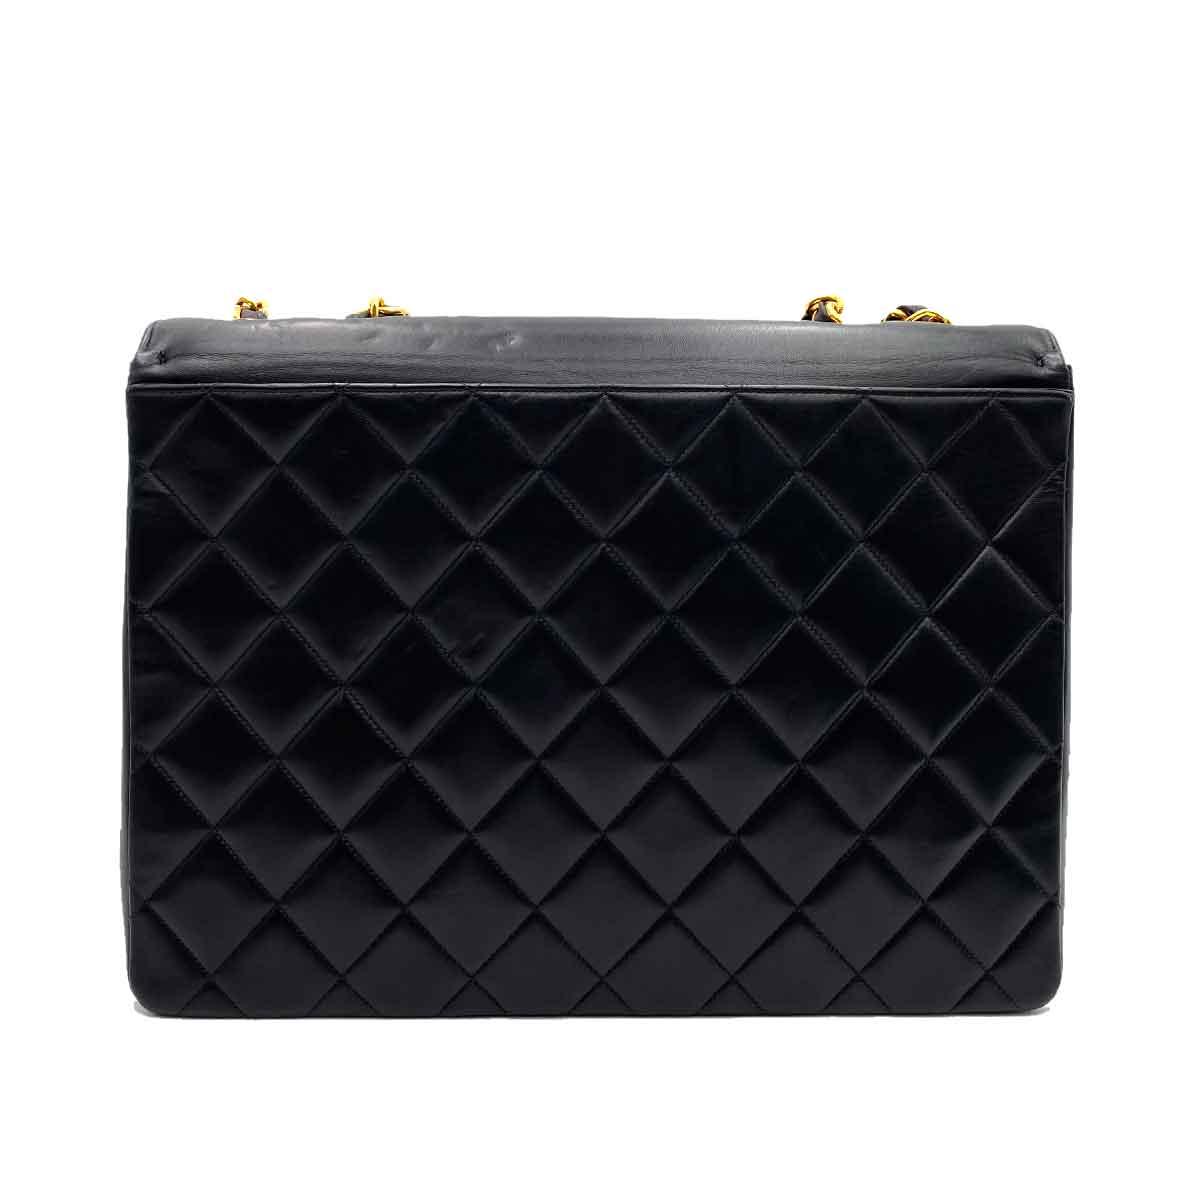 Luxury Promise Chanel Vintage Flap Maxi Timeless CC Turnlock Black lambskin GHW #2 90233652